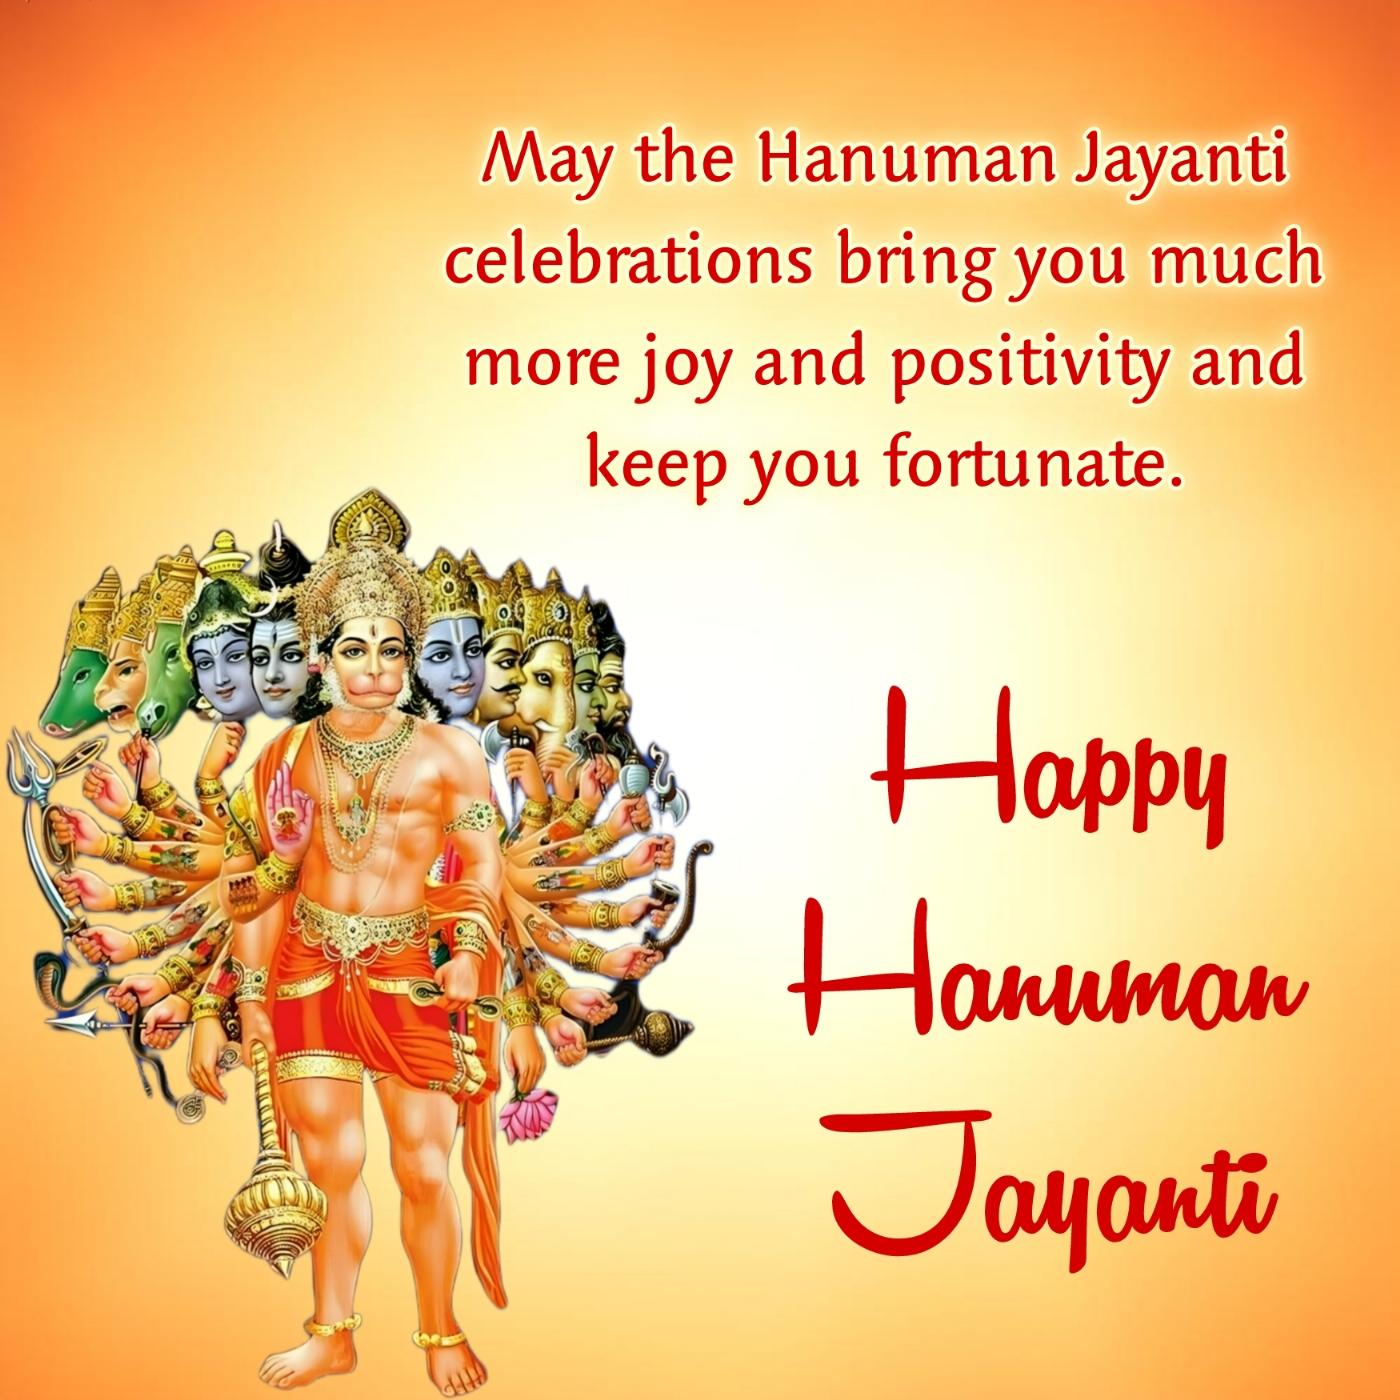 May the Hanuman Jayanti celebrations bring you much more joy